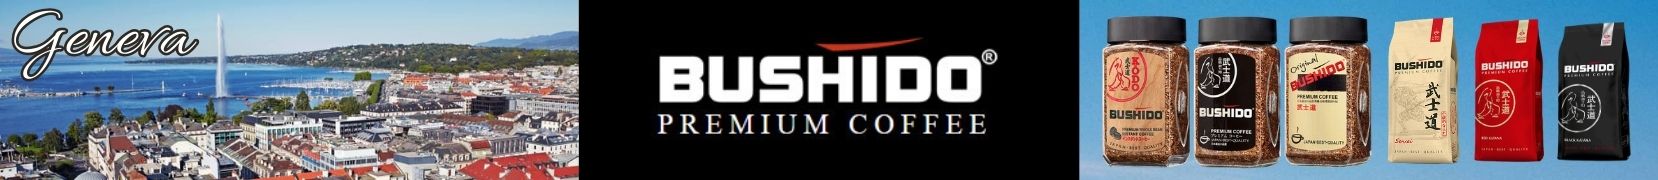 Bushido Premium Coffee